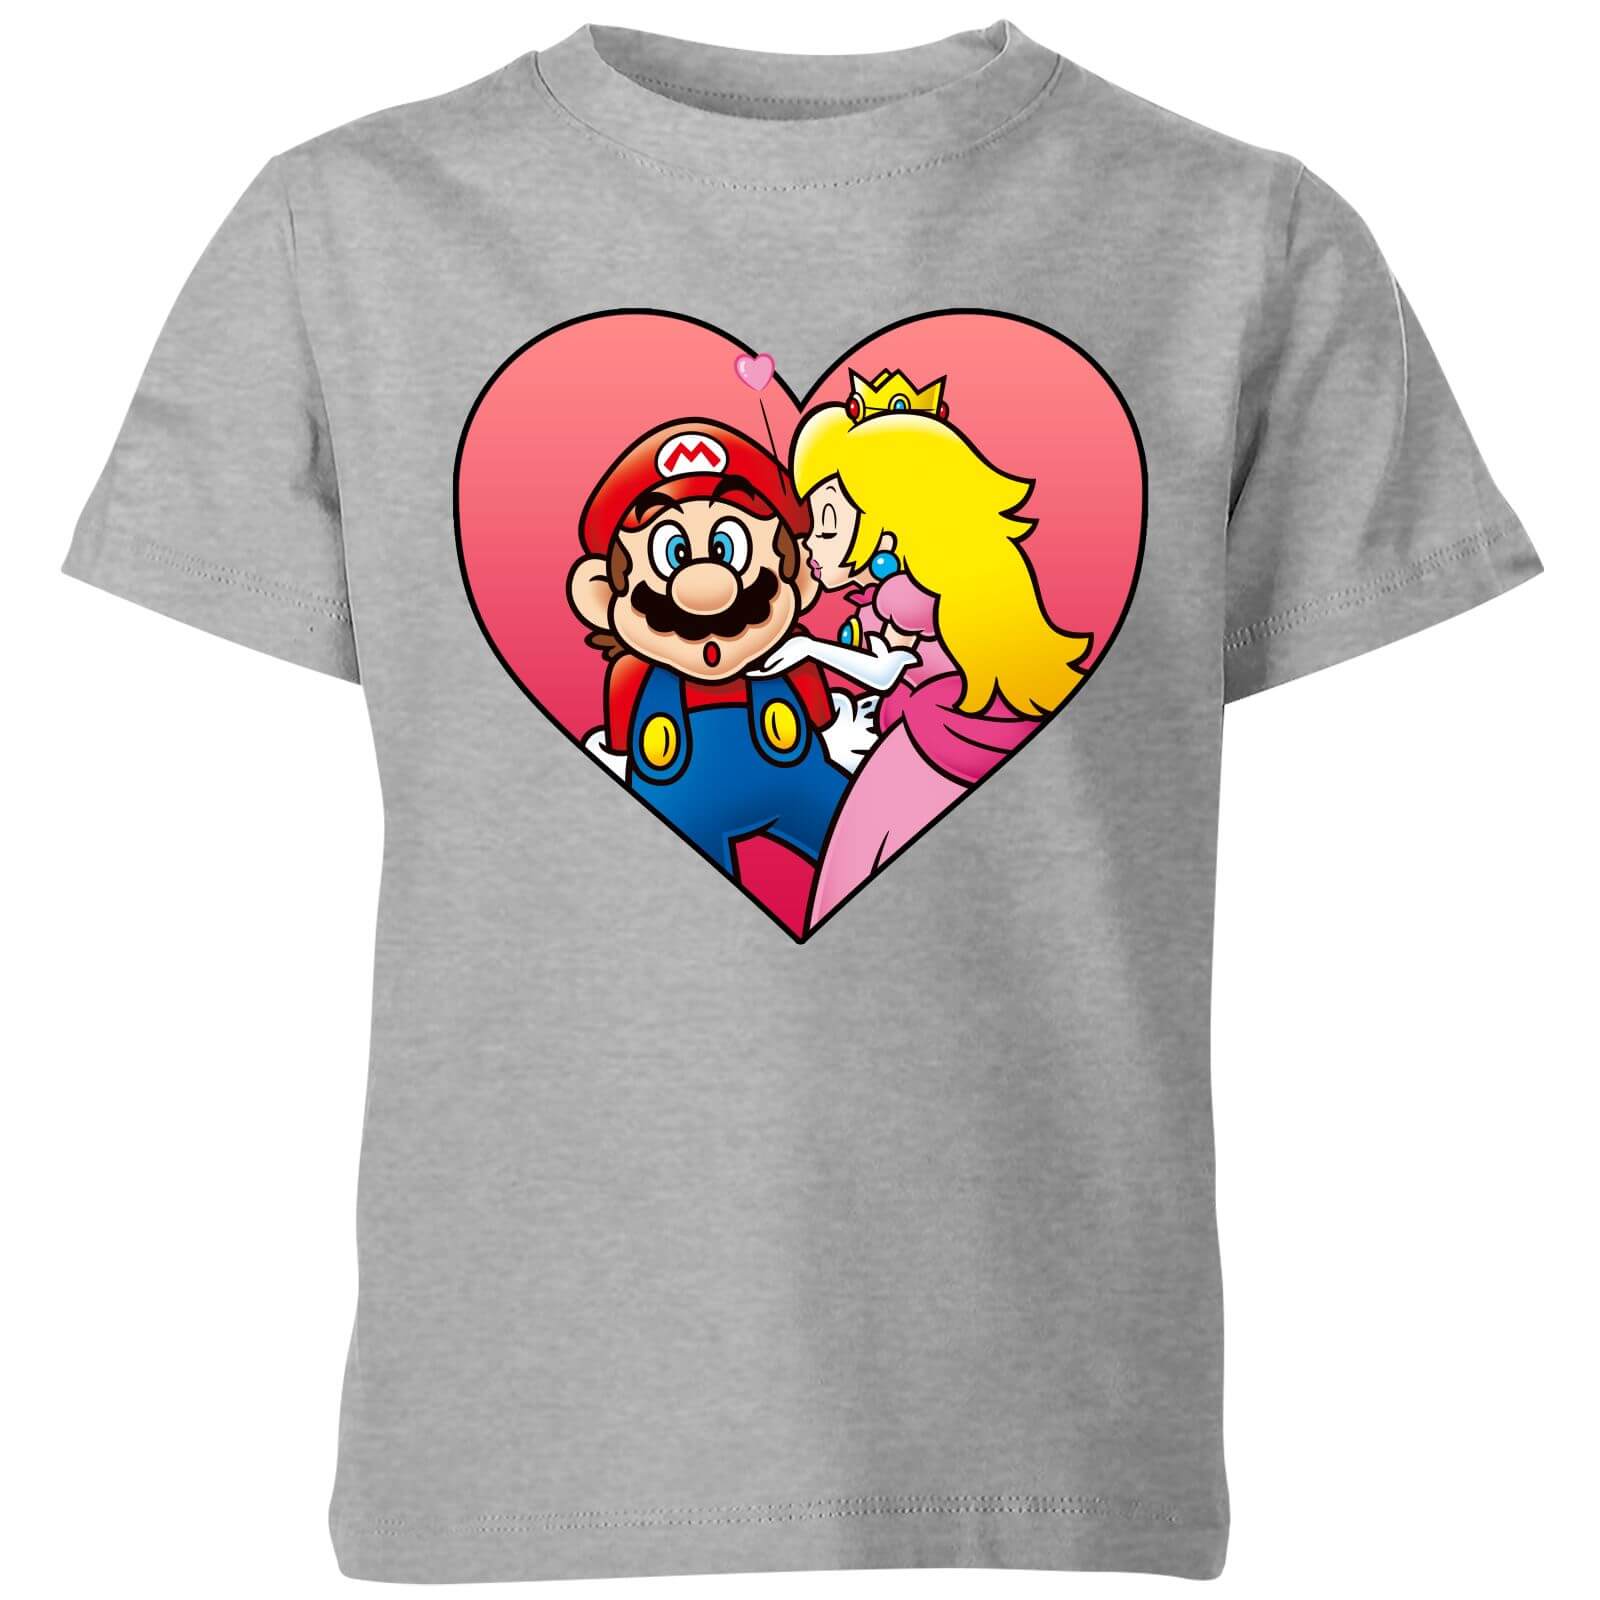 Nintendo Super Mario Peach Kiss Kid's T-Shirt - Grey - 11-12 Years - Grey